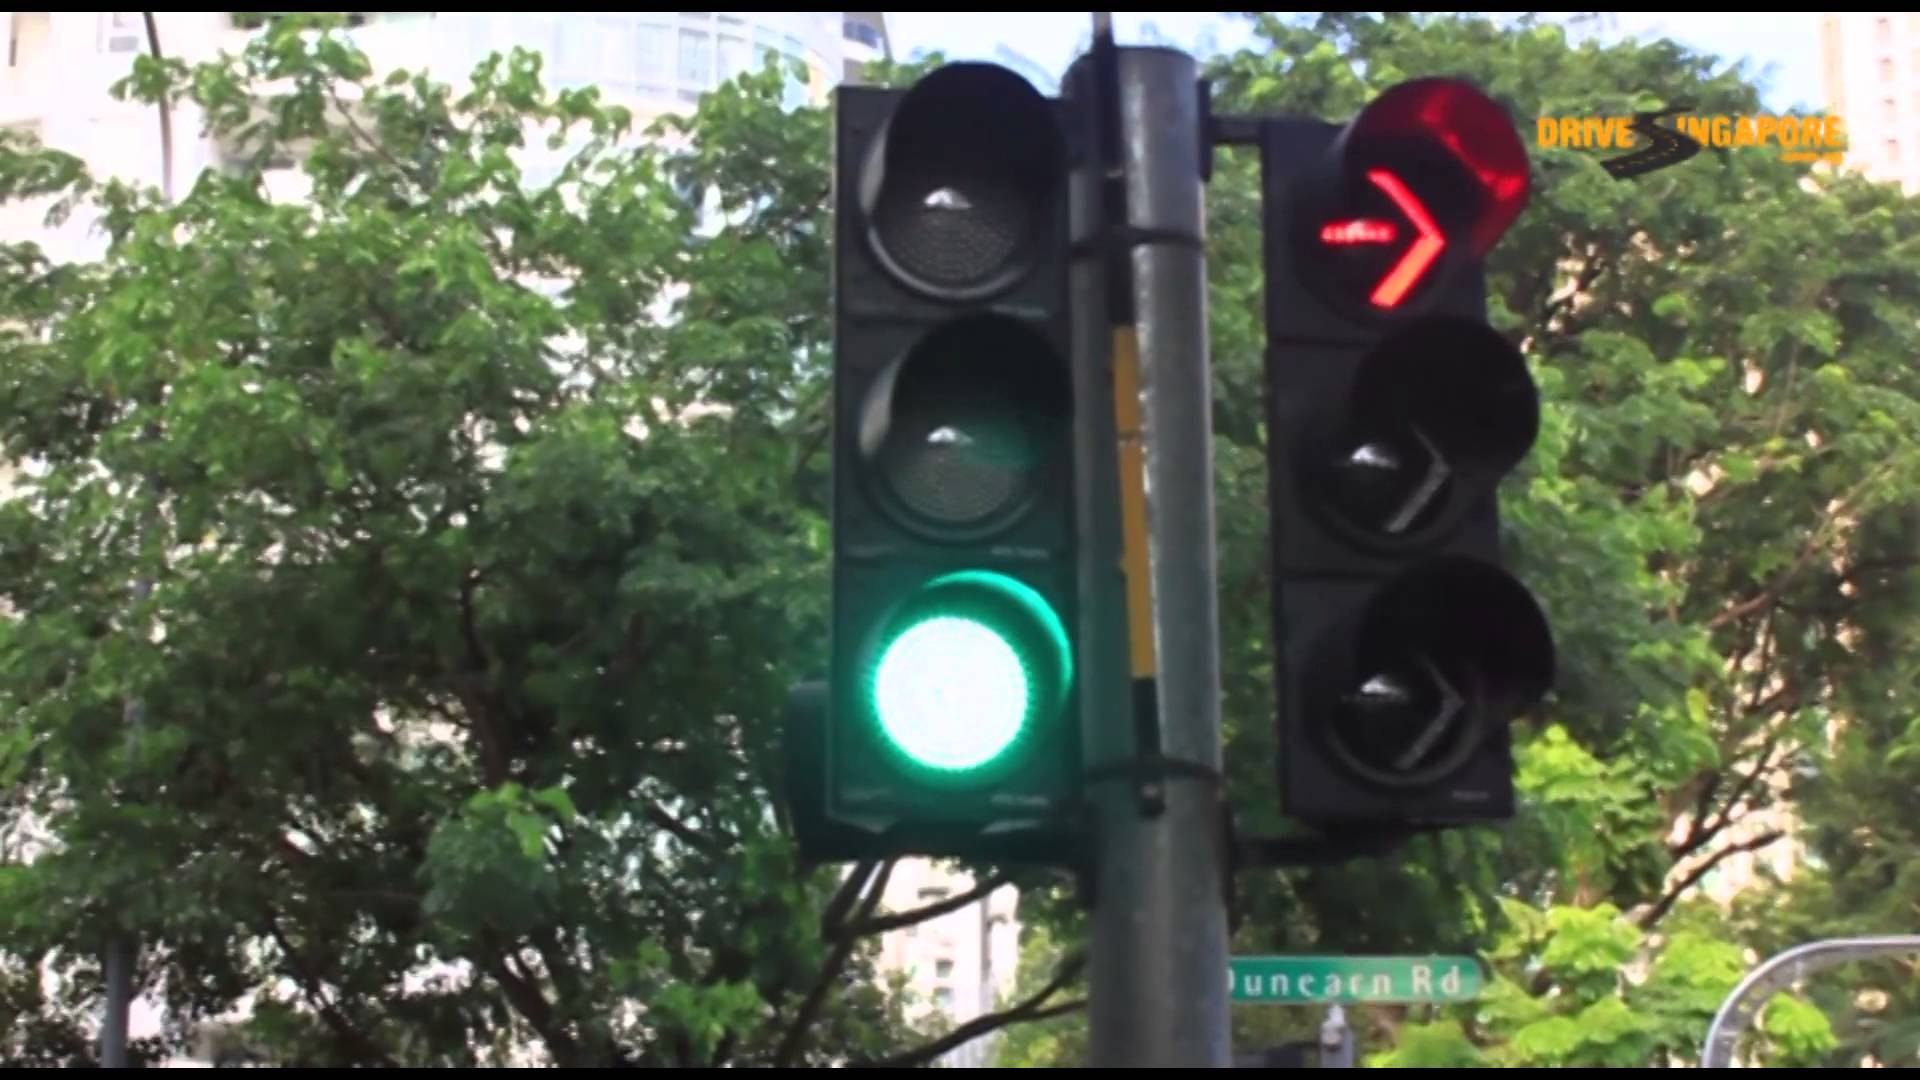 Modern traffic light